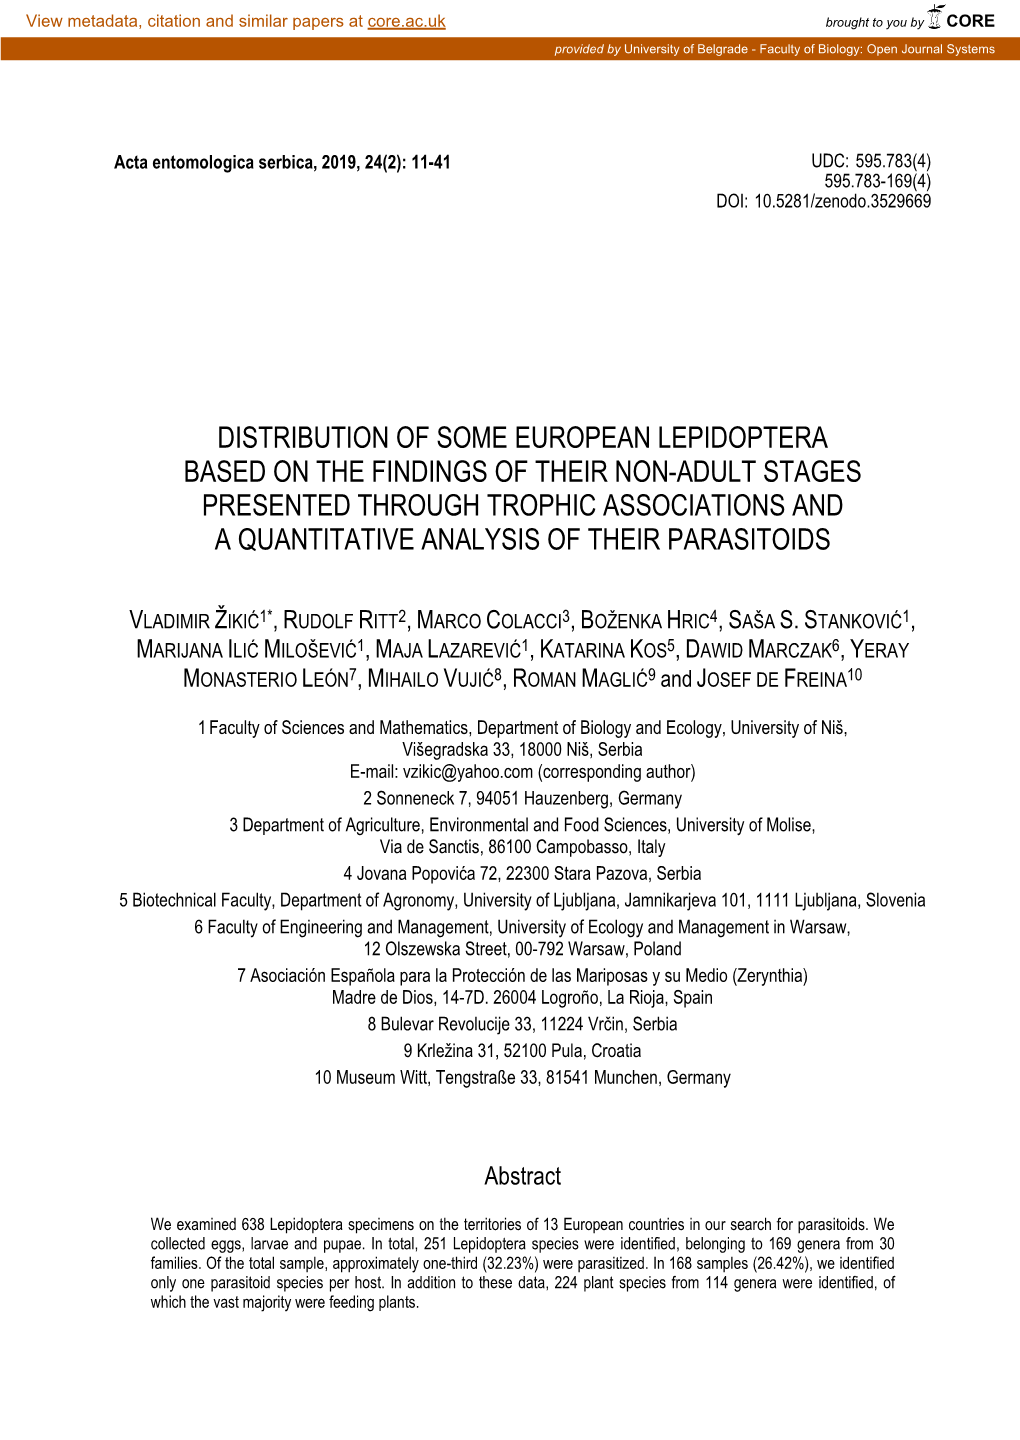 Distribution of Some European Lepidoptera